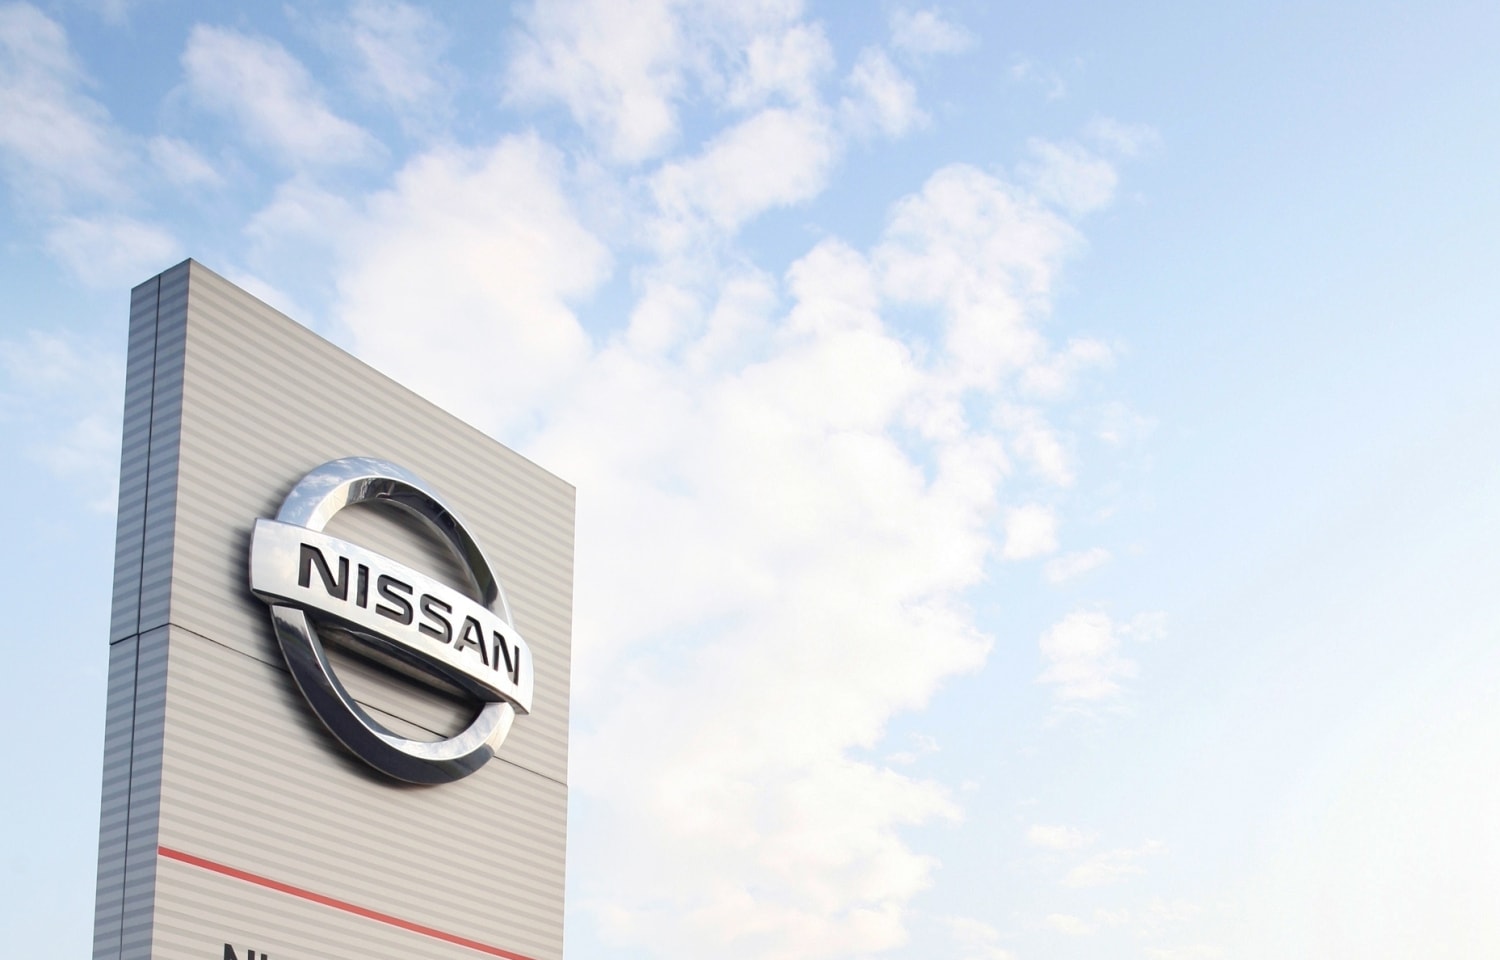 Nissan global market share #8